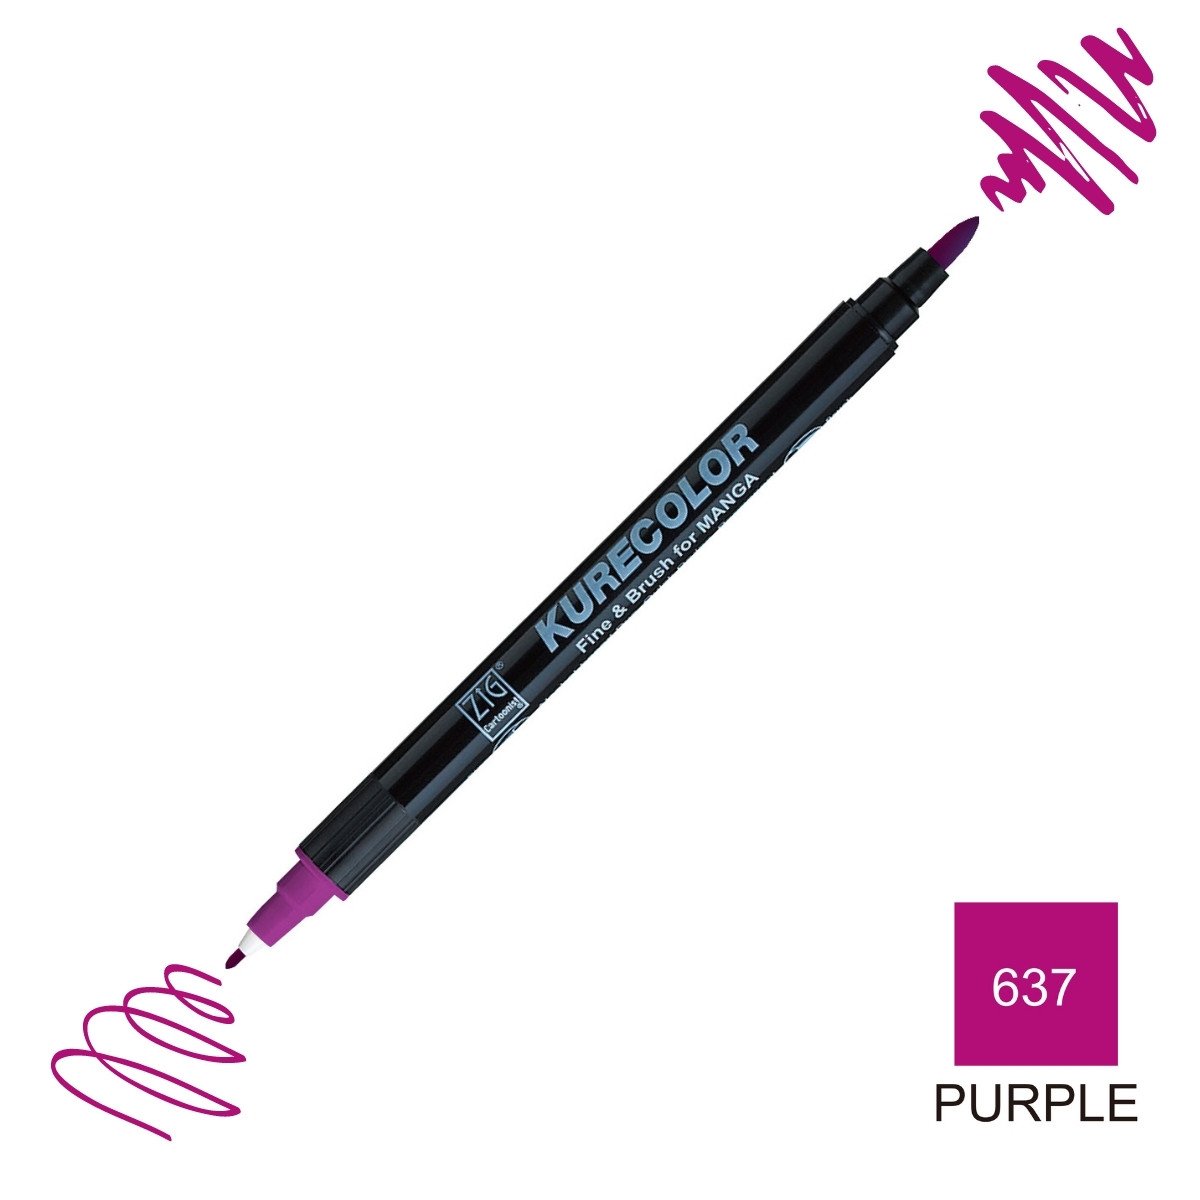 Zig Kurecolor Mangaka Fine&Brush Çift Taraflı Kalem CNKC-2200 No 637 Purple